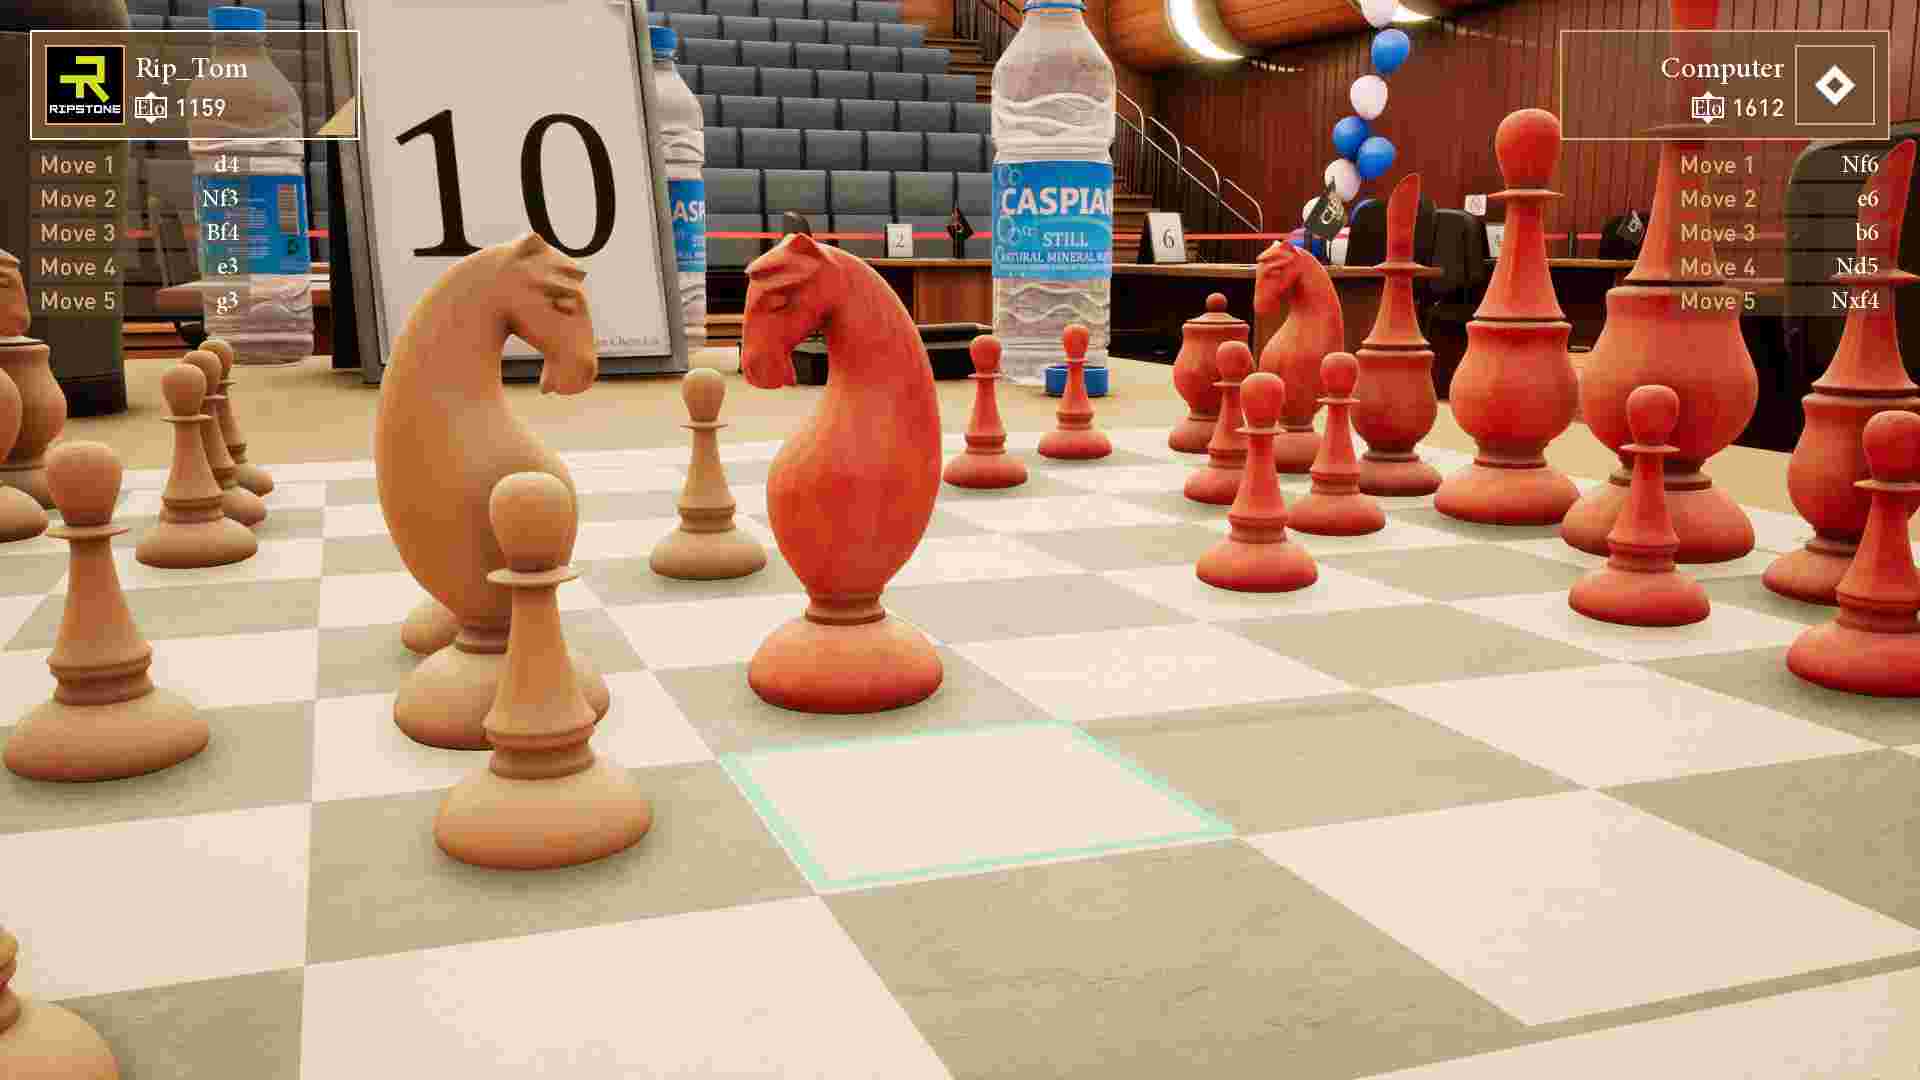 Chess Ultra Gameplay HD (PC)